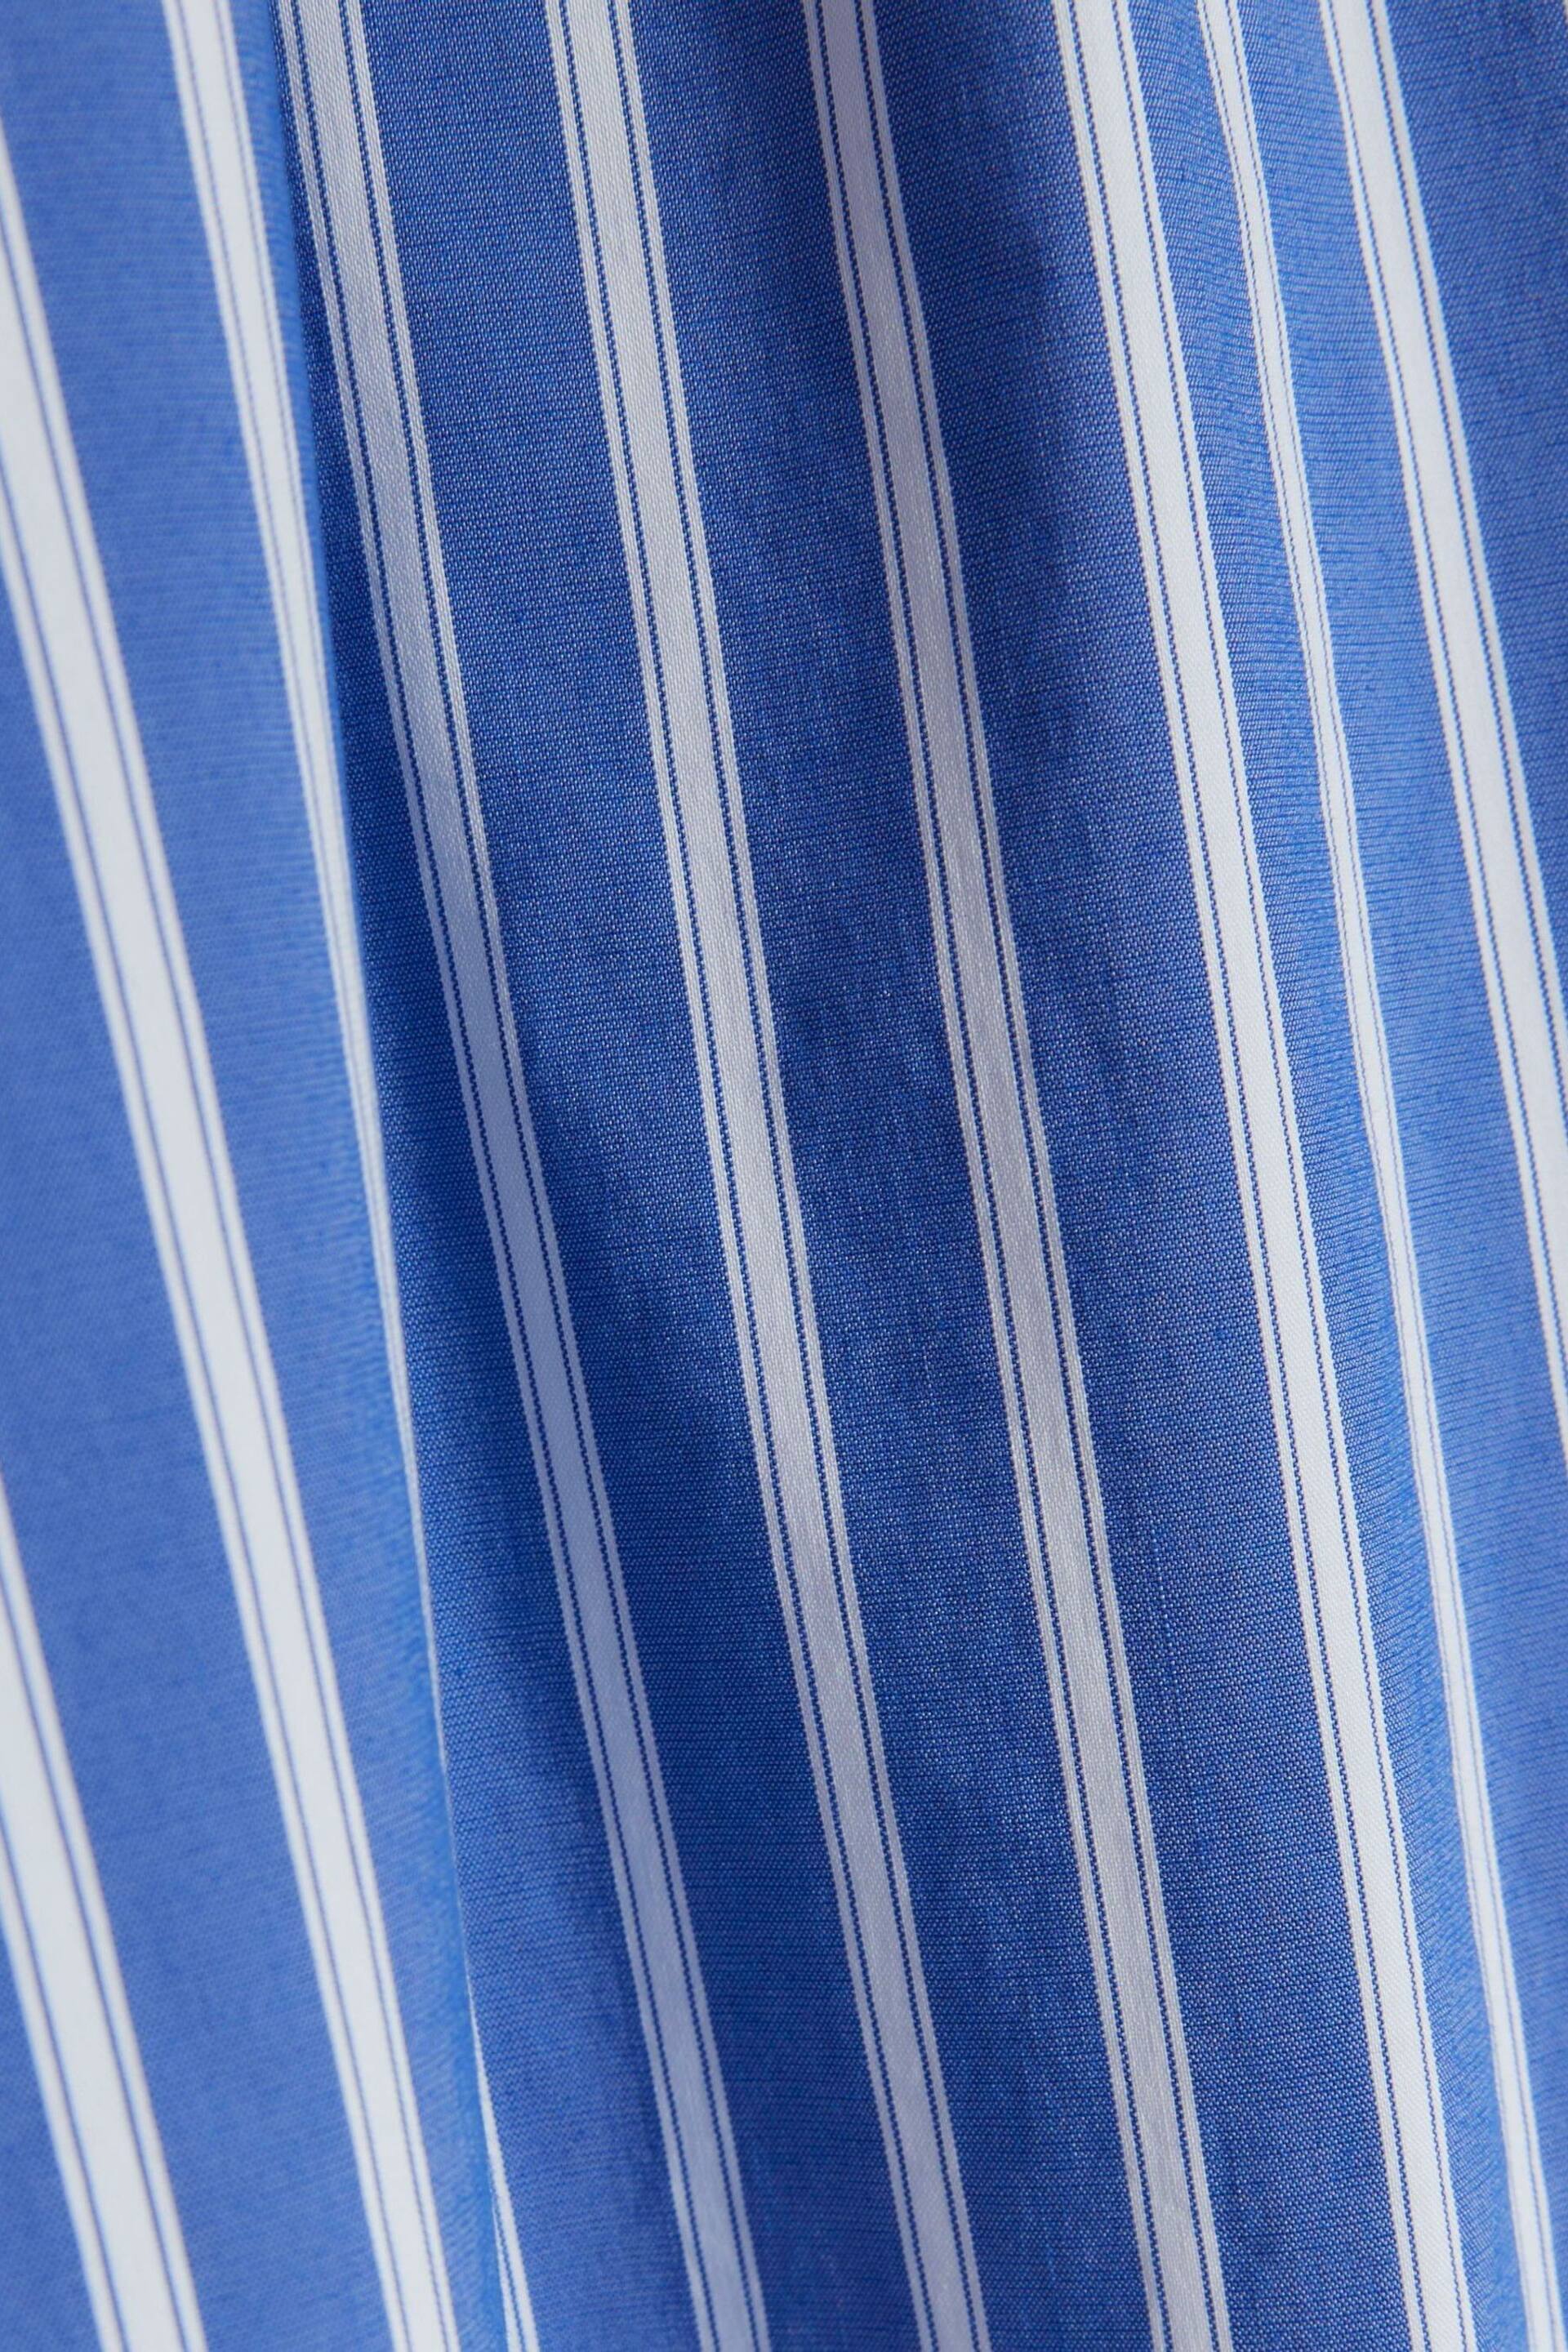 River Island Blue Stripe Poplin Pull On Trousers - Image 4 of 4